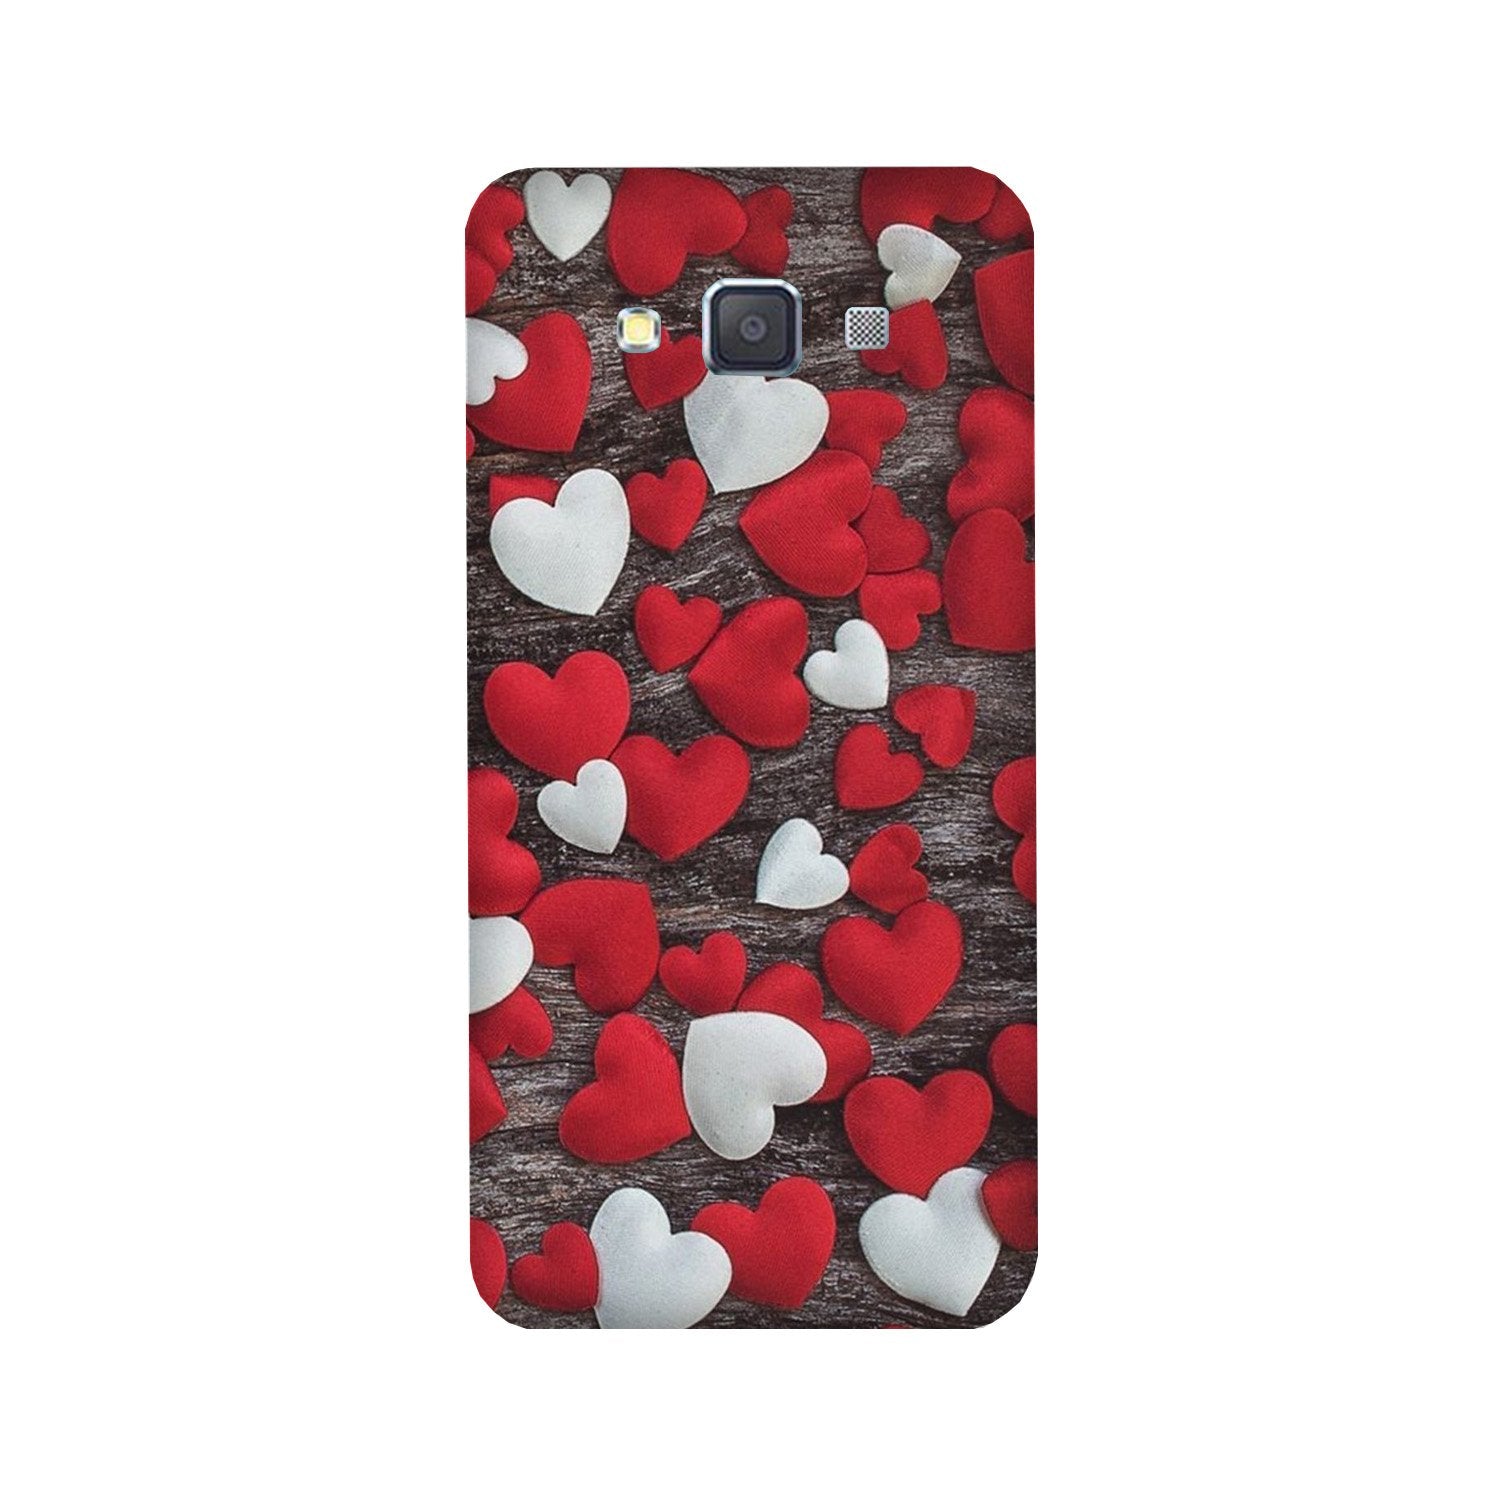 Red White Hearts Case for Galaxy Grand Max(Design - 105)